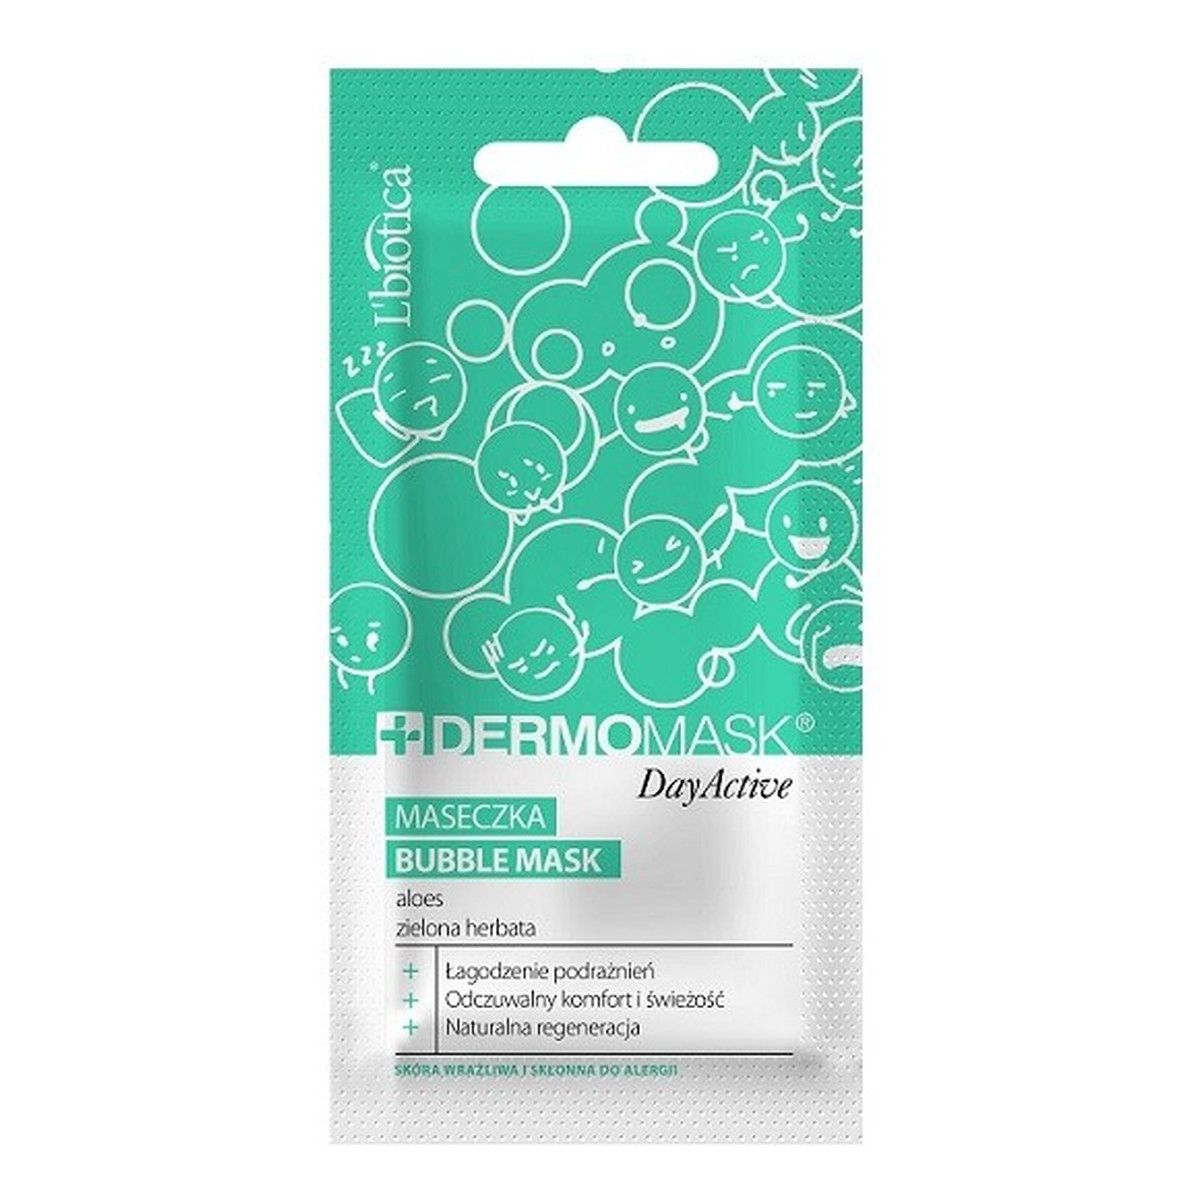 Lbiotica / Biovax Dermomask Day Active Maseczka bąbelkowa na twarz - aloes & zielona herbata 10ml